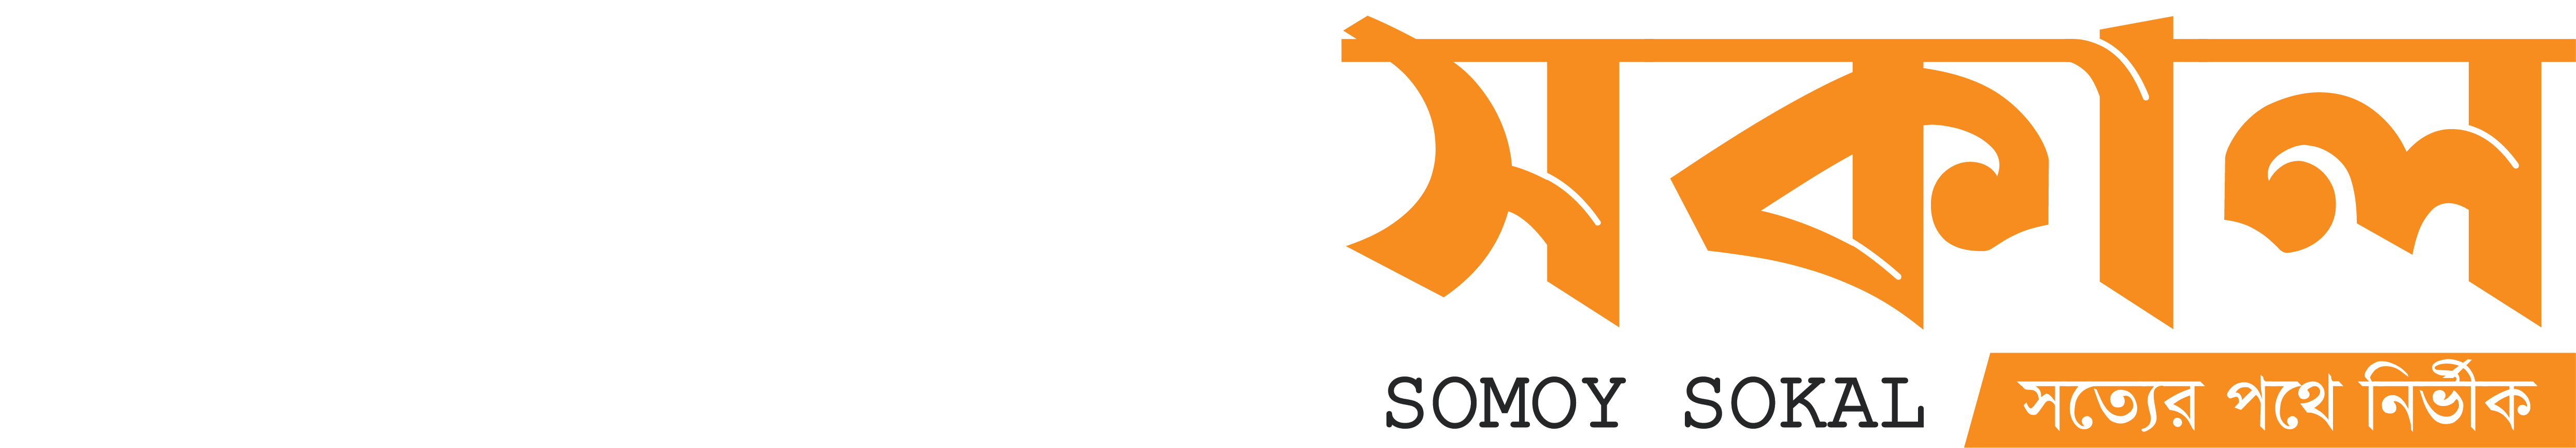 Somoy Sokal